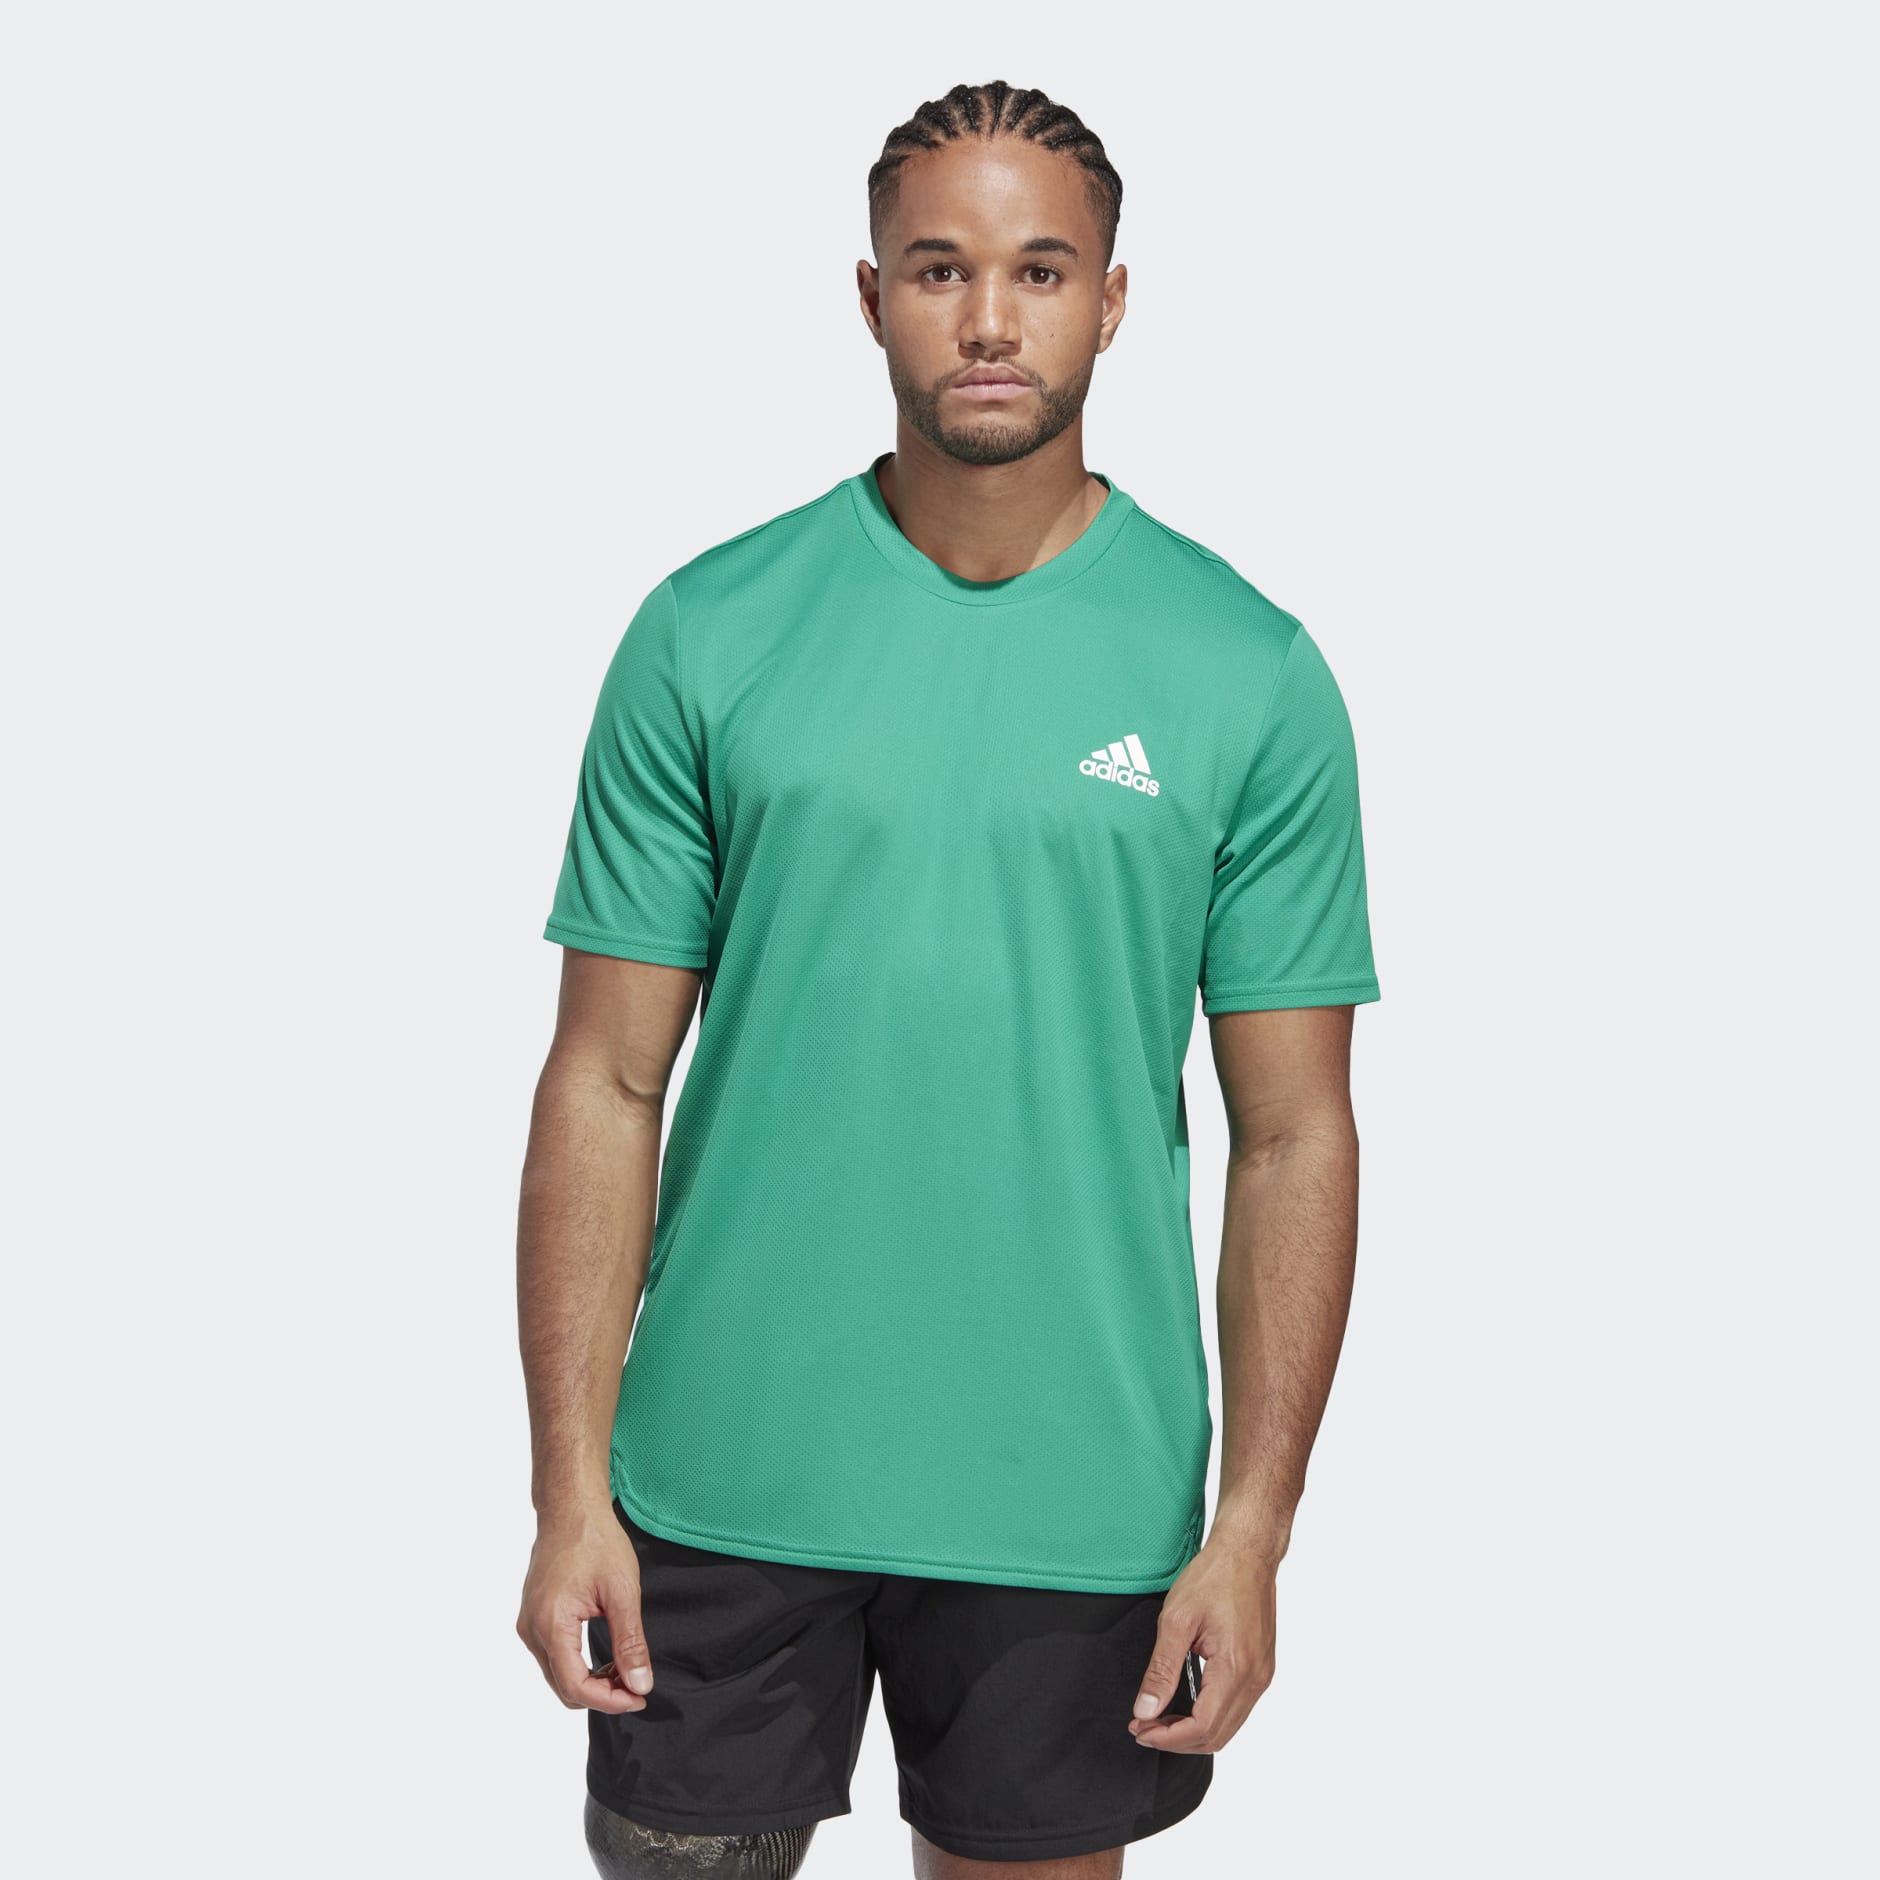 Men's Clothing - AEROREADY Designed for Movement Tee - Green | adidas ...